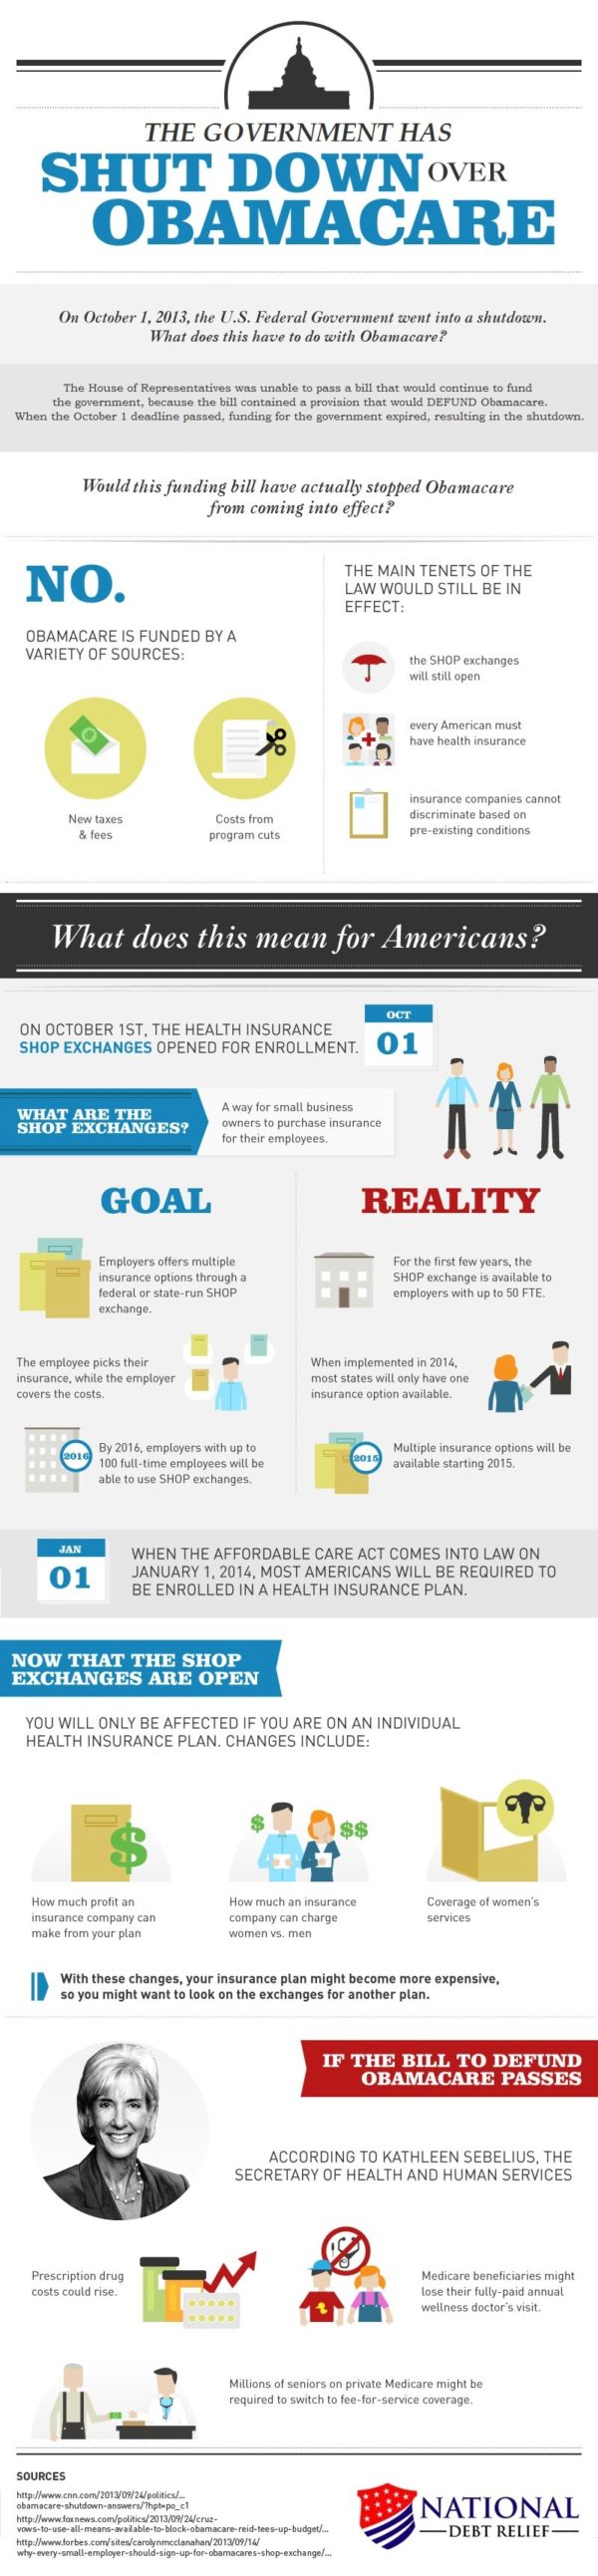 Government Shutdown Obamacare infographic